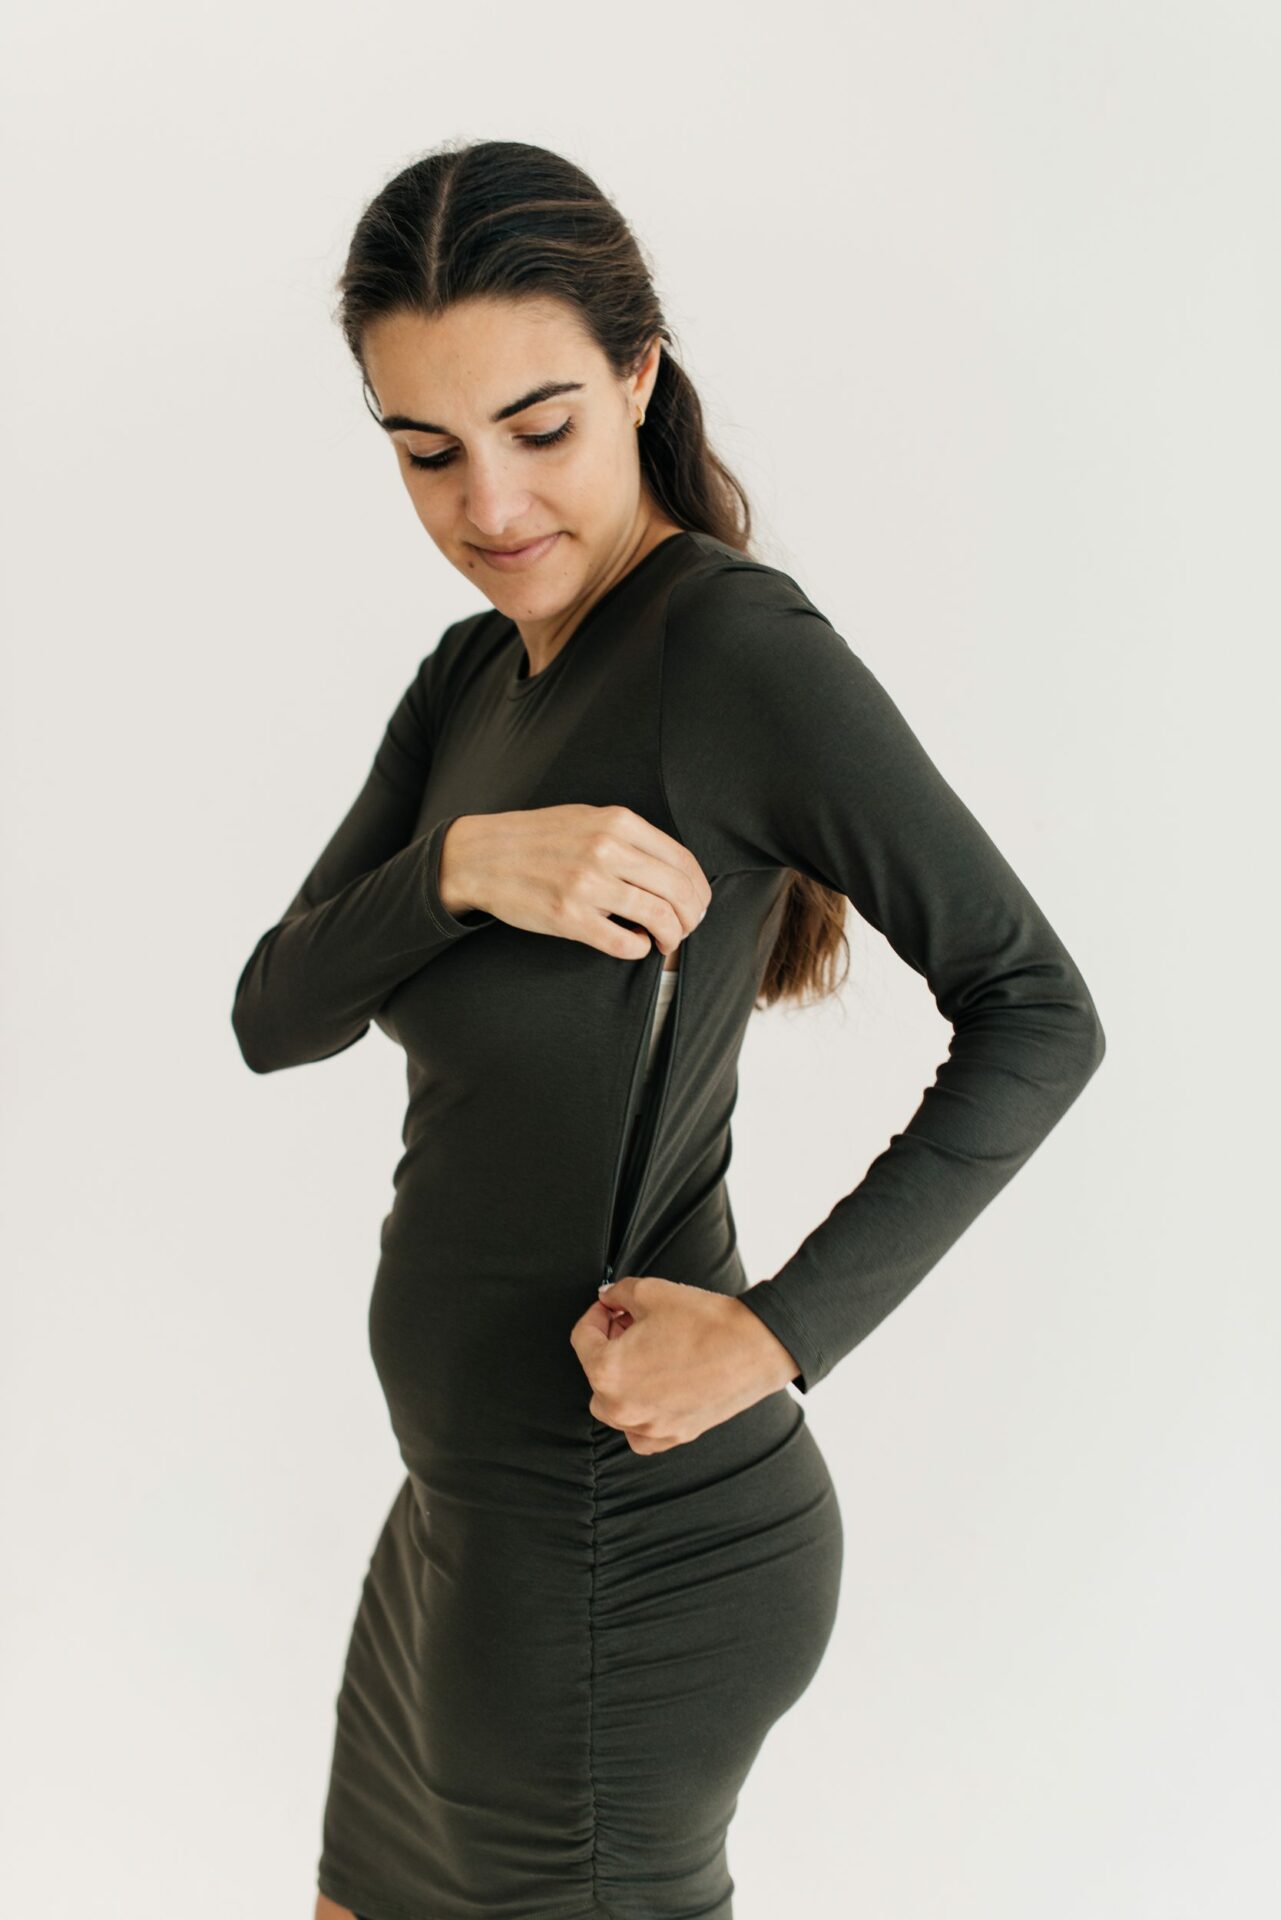 Buy Ruche Dress Long Sleeve Olive - Momsy Maternity, Nursing, & Womenswear